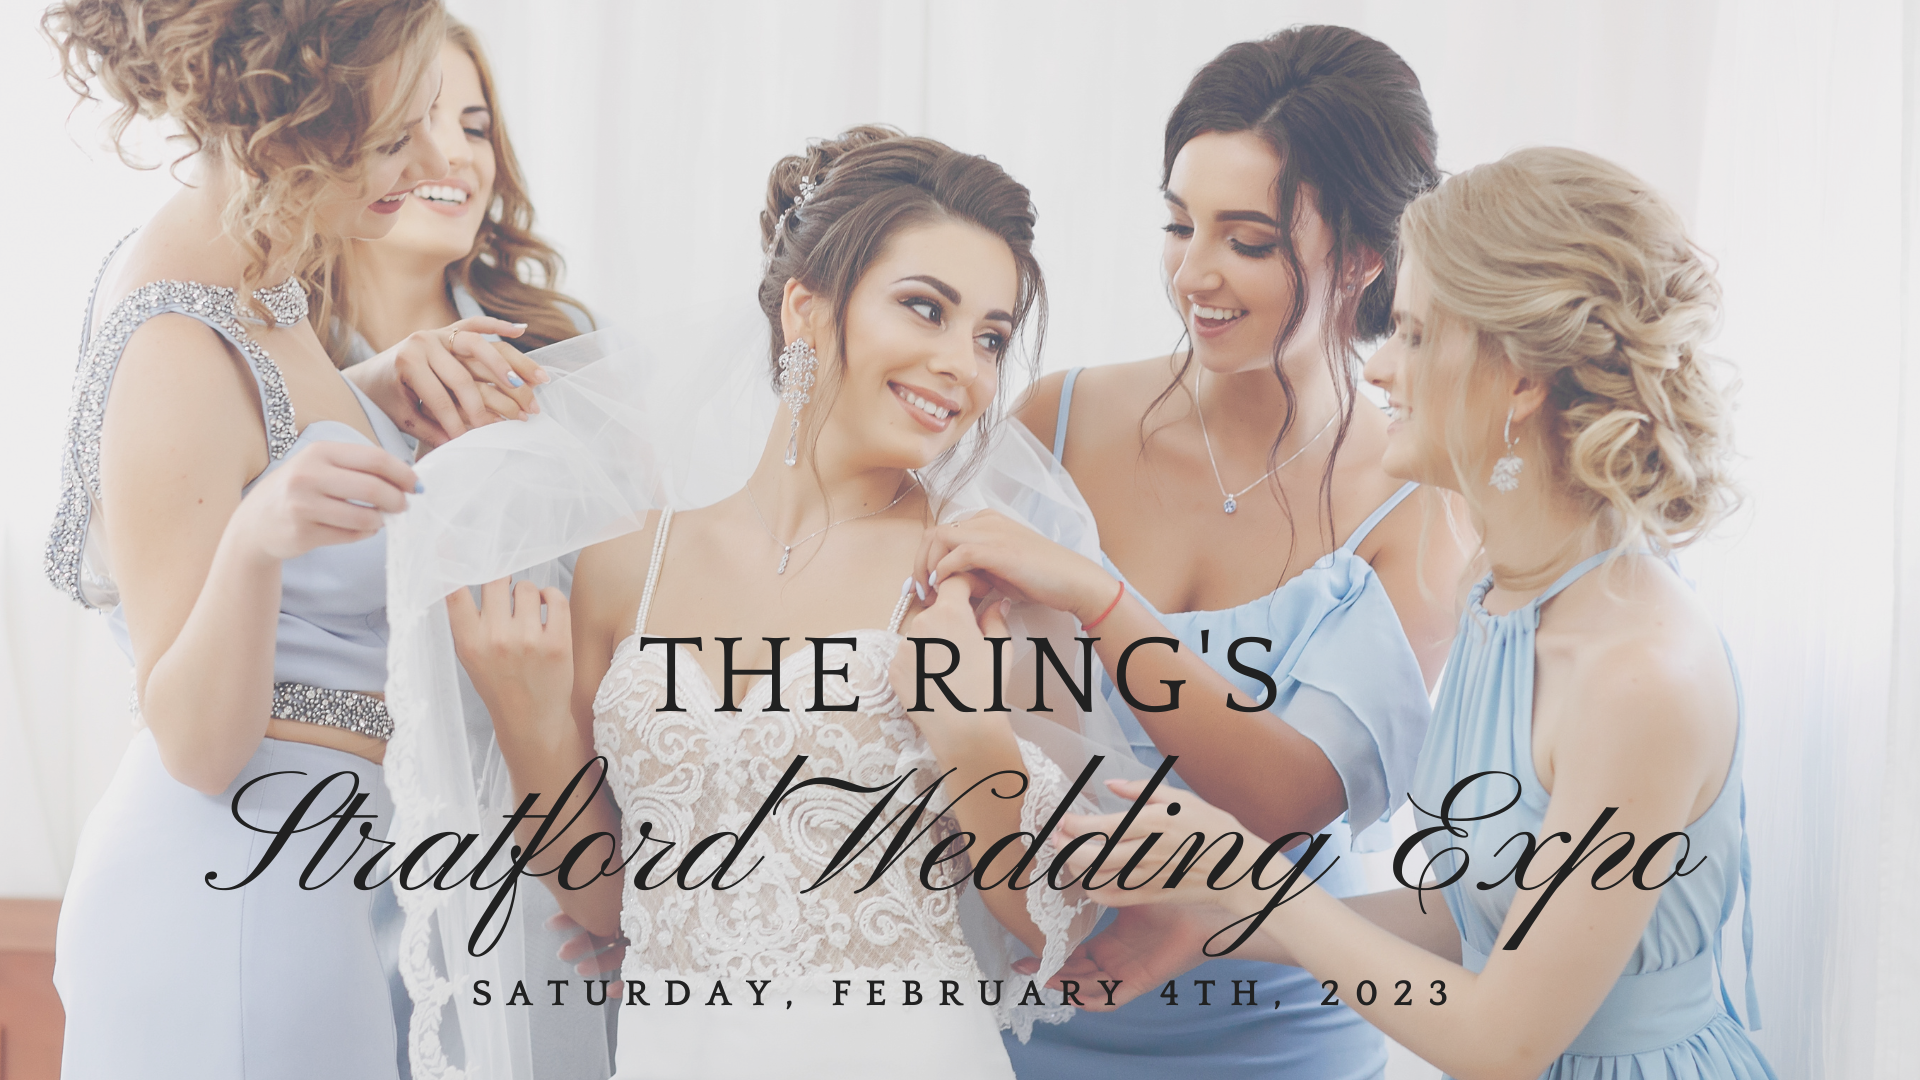 Stratford Wedding Expo February 4, 2023 Best Western Arden Park Hotel